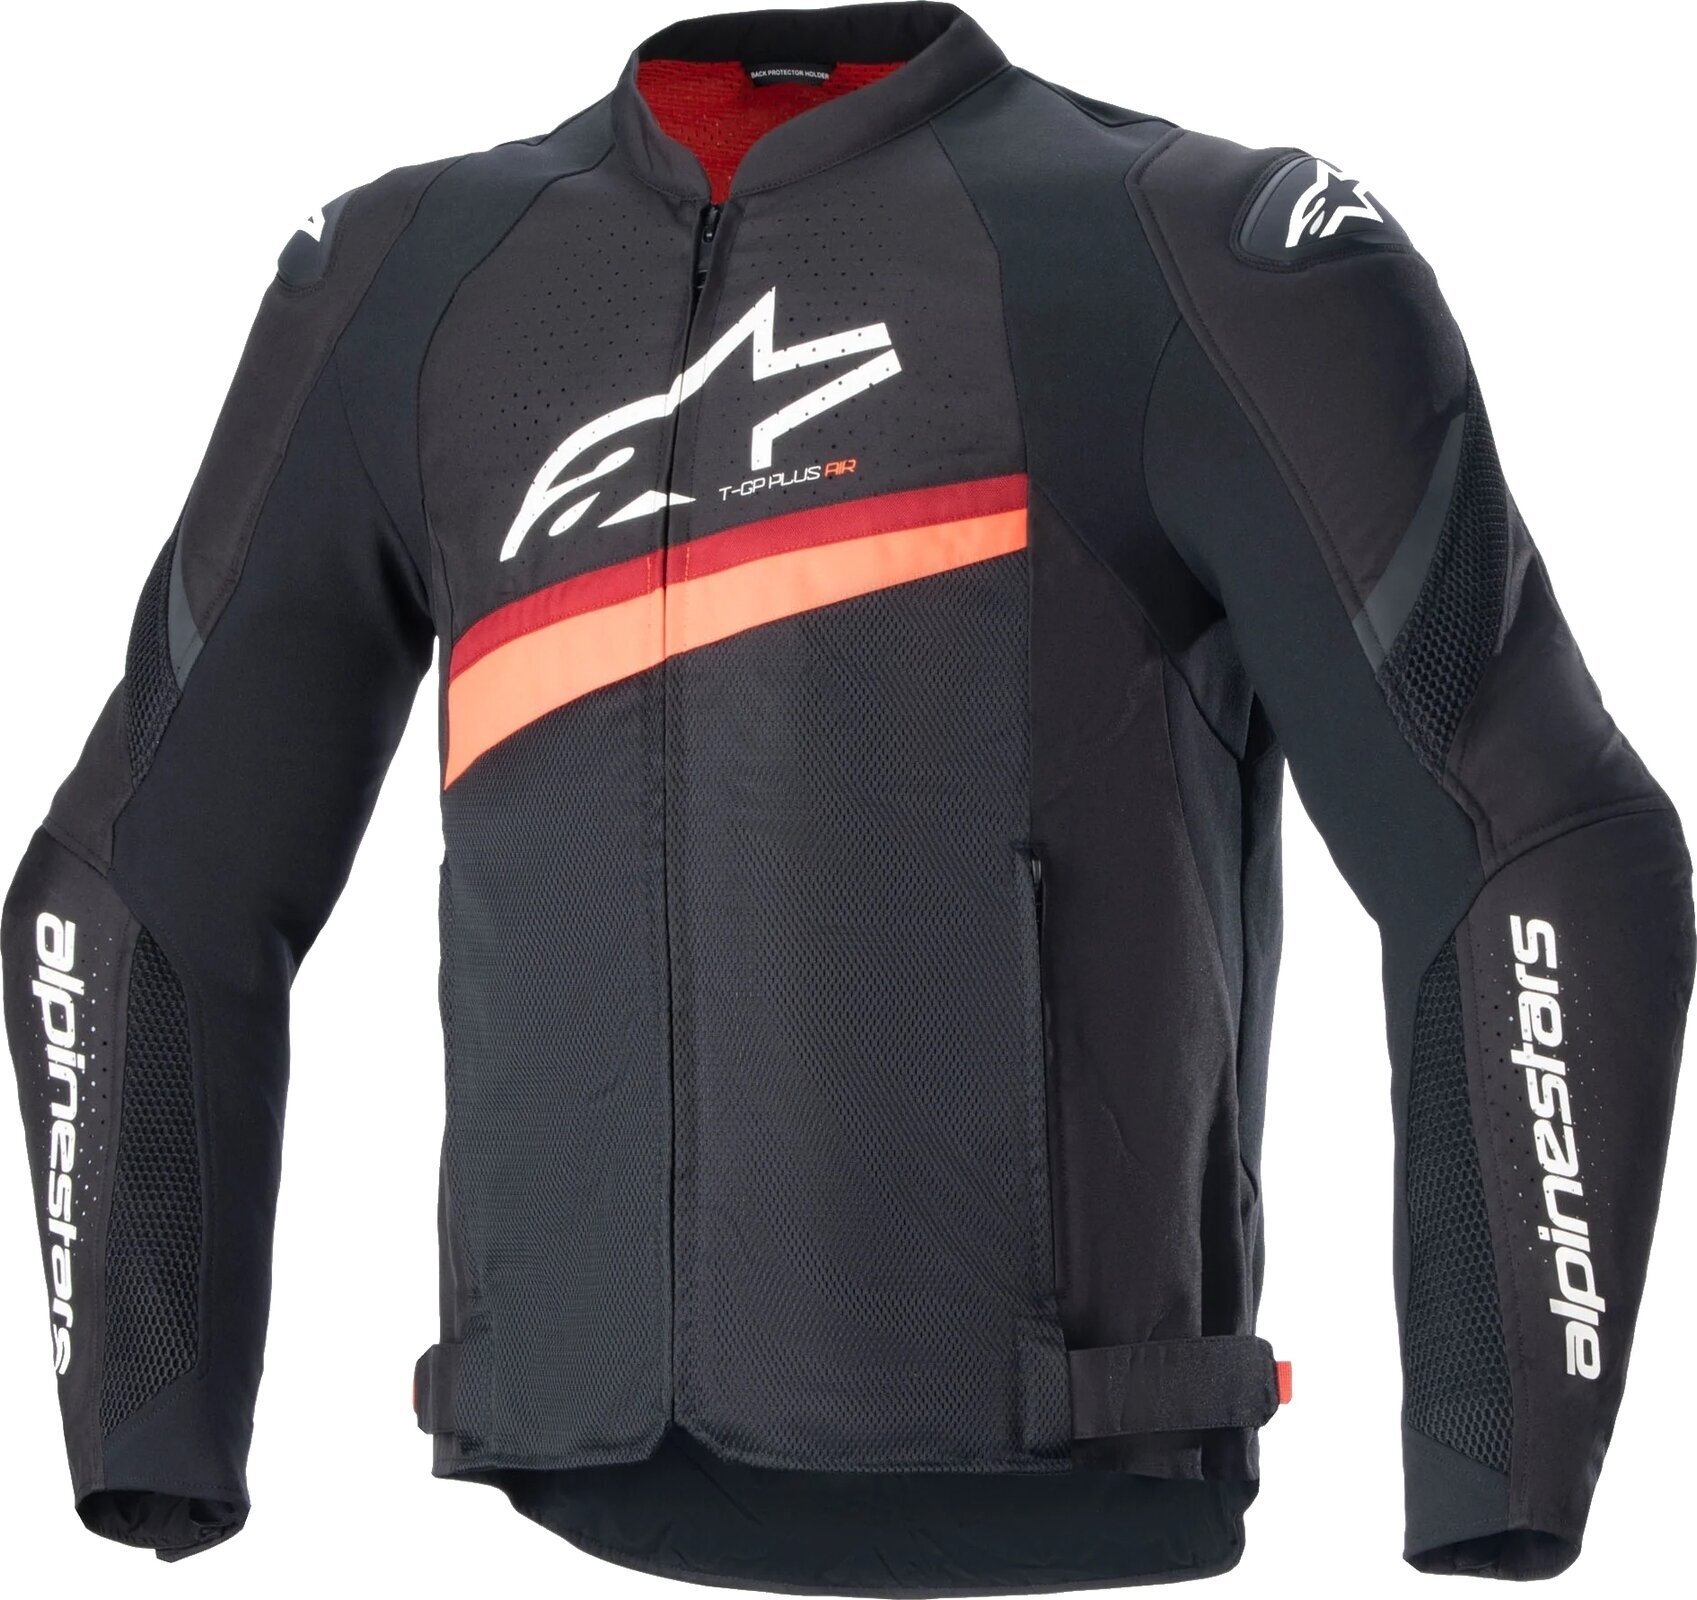 Textiele jas Alpinestars T-GP Plus V4 Jacket Black/Red/Fluo 3XL Textiele jas